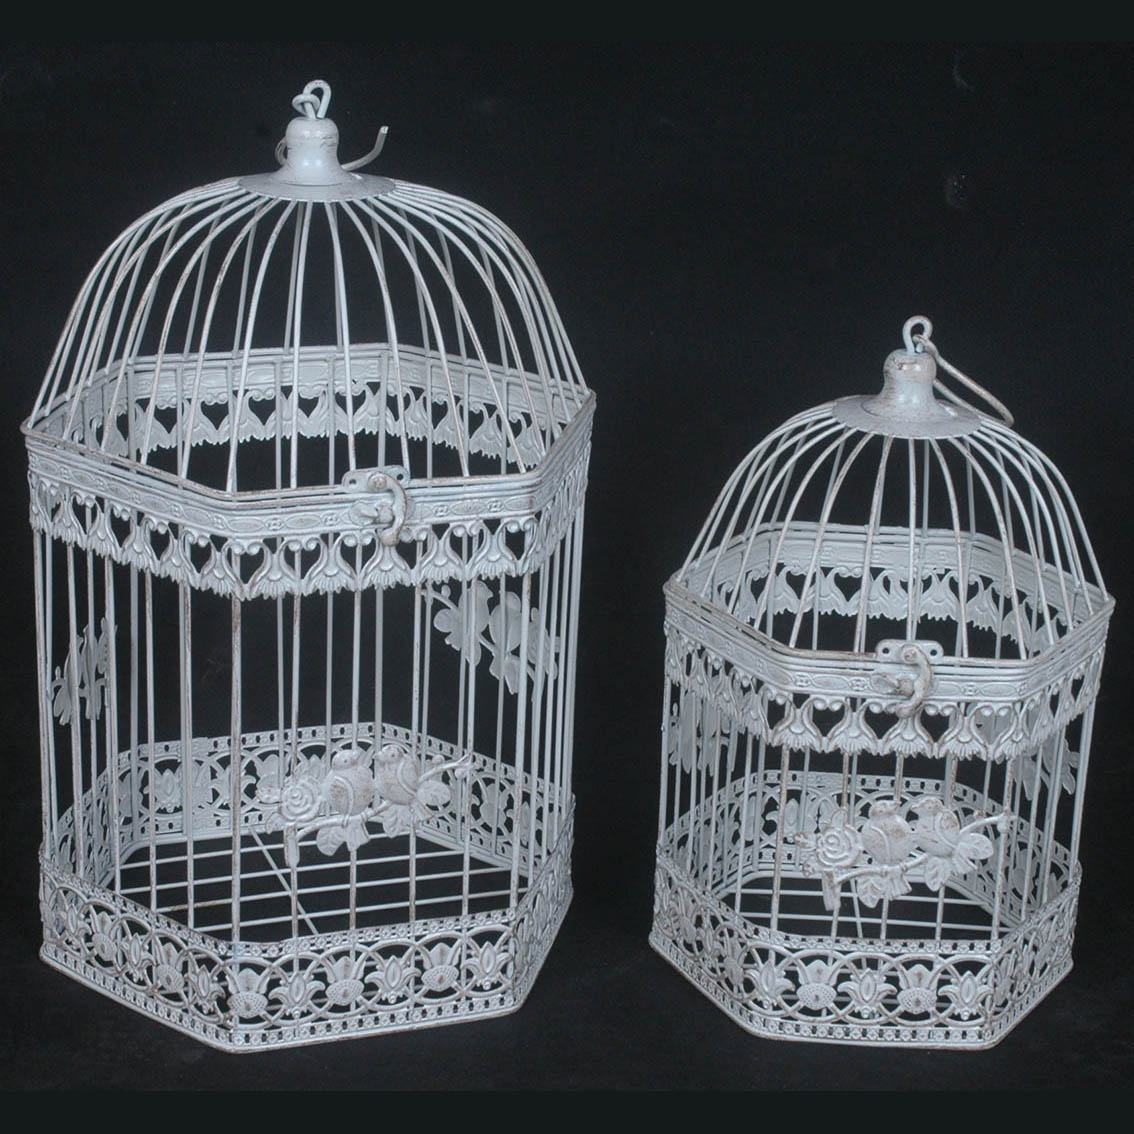 S/2 hexagon metal birdcage with bird decor 